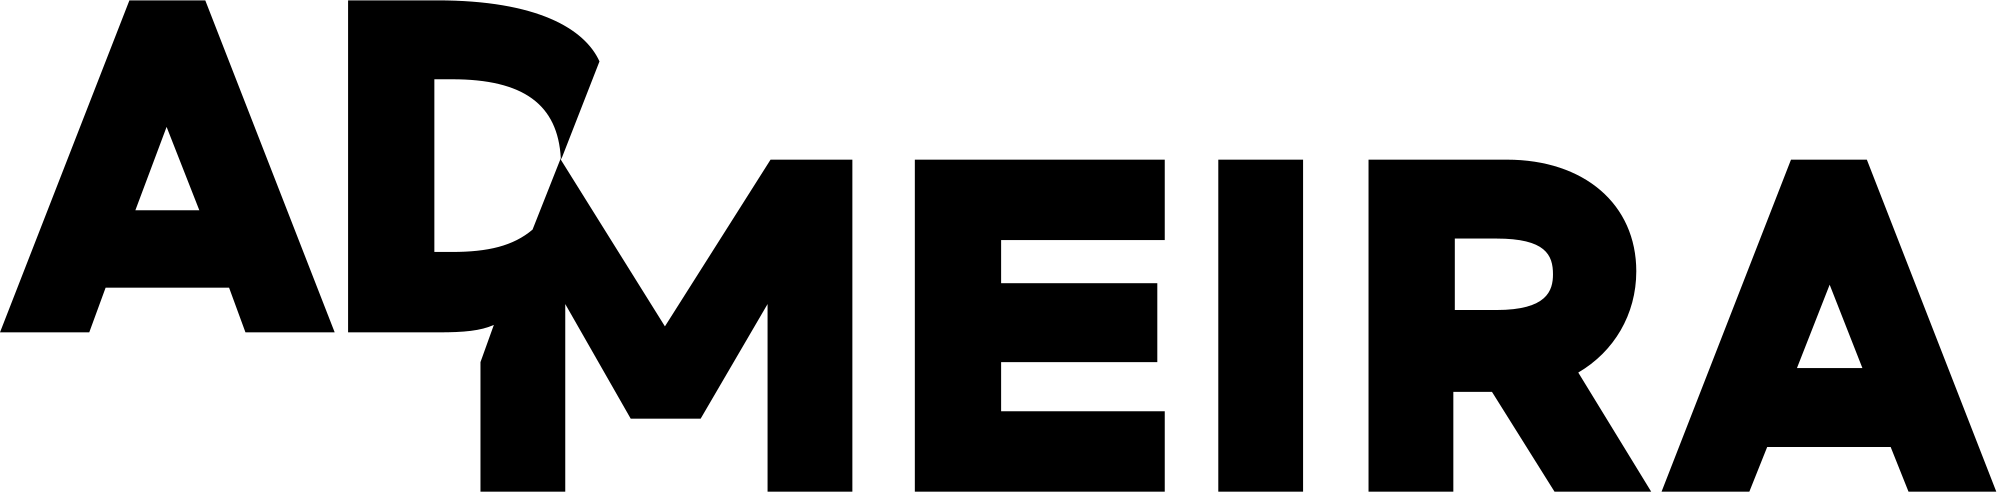 2000px-Admeira_logo.svg.png